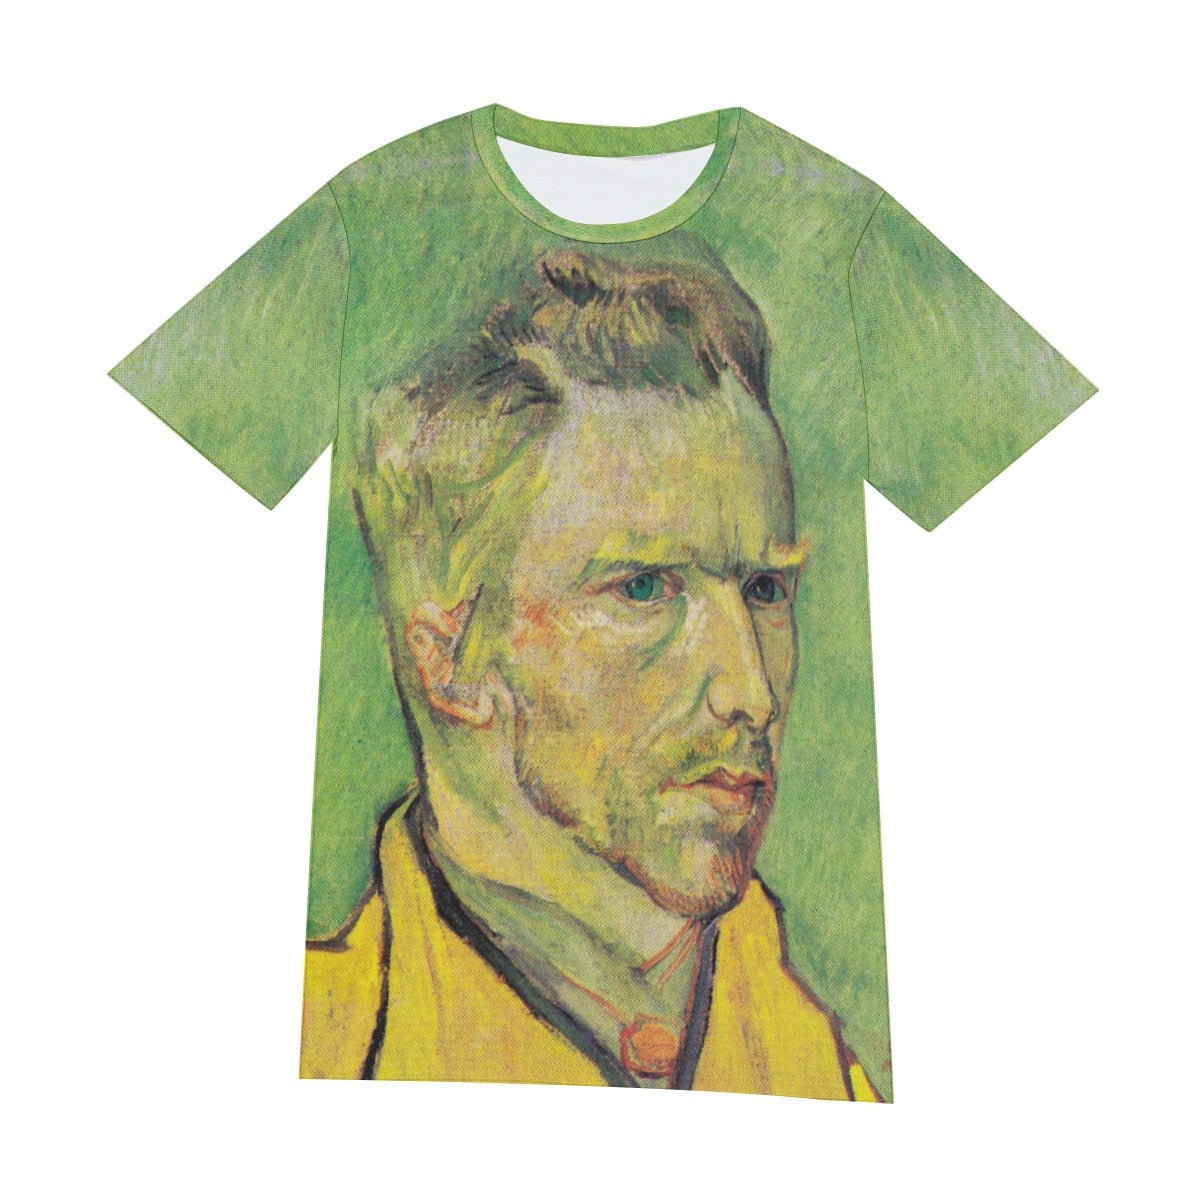 Vincent van Gogh’s Self-Portrait on Green T-Shirt